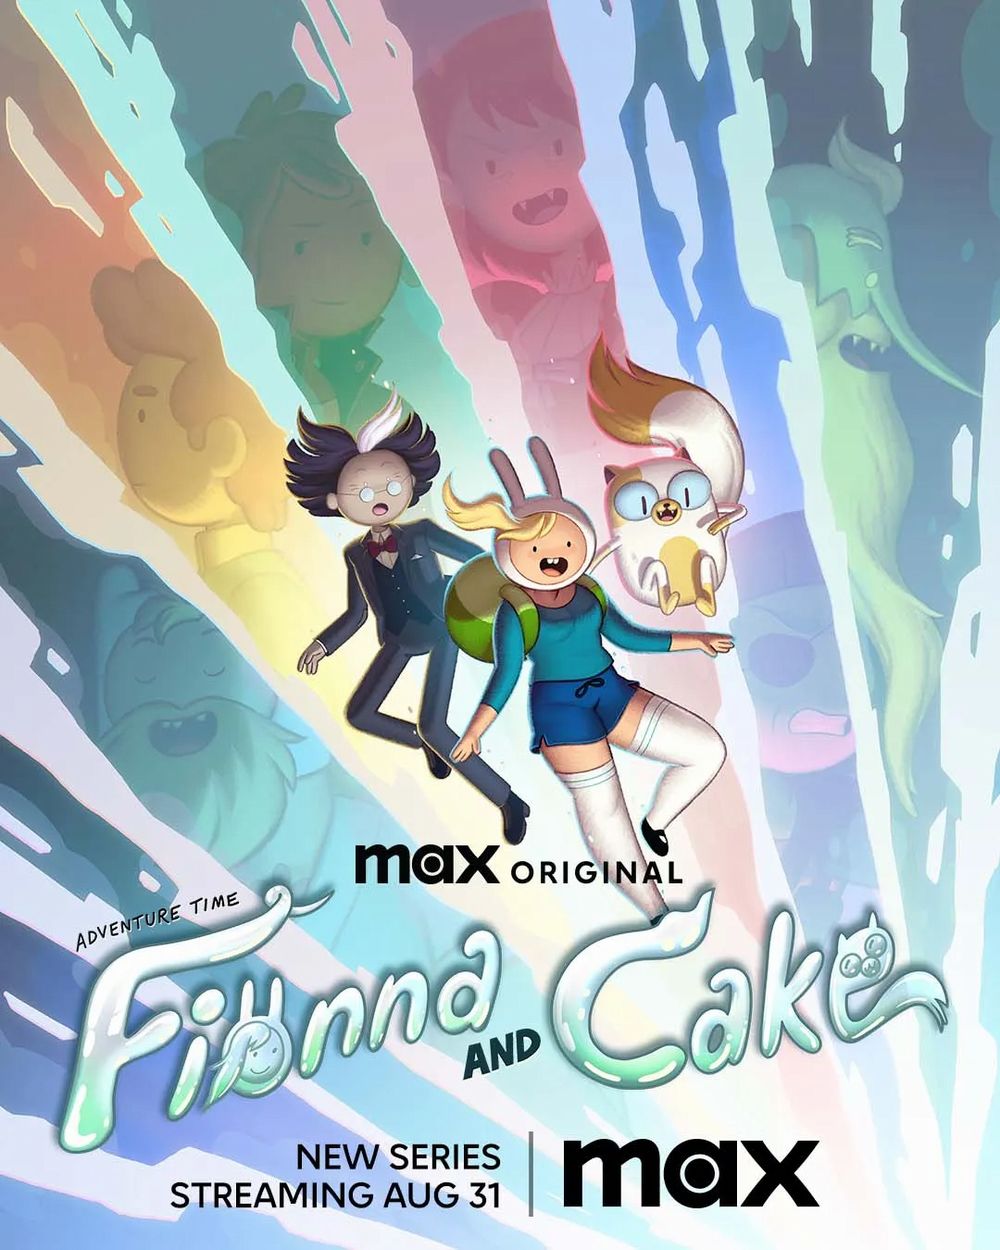 Fionna and Cake